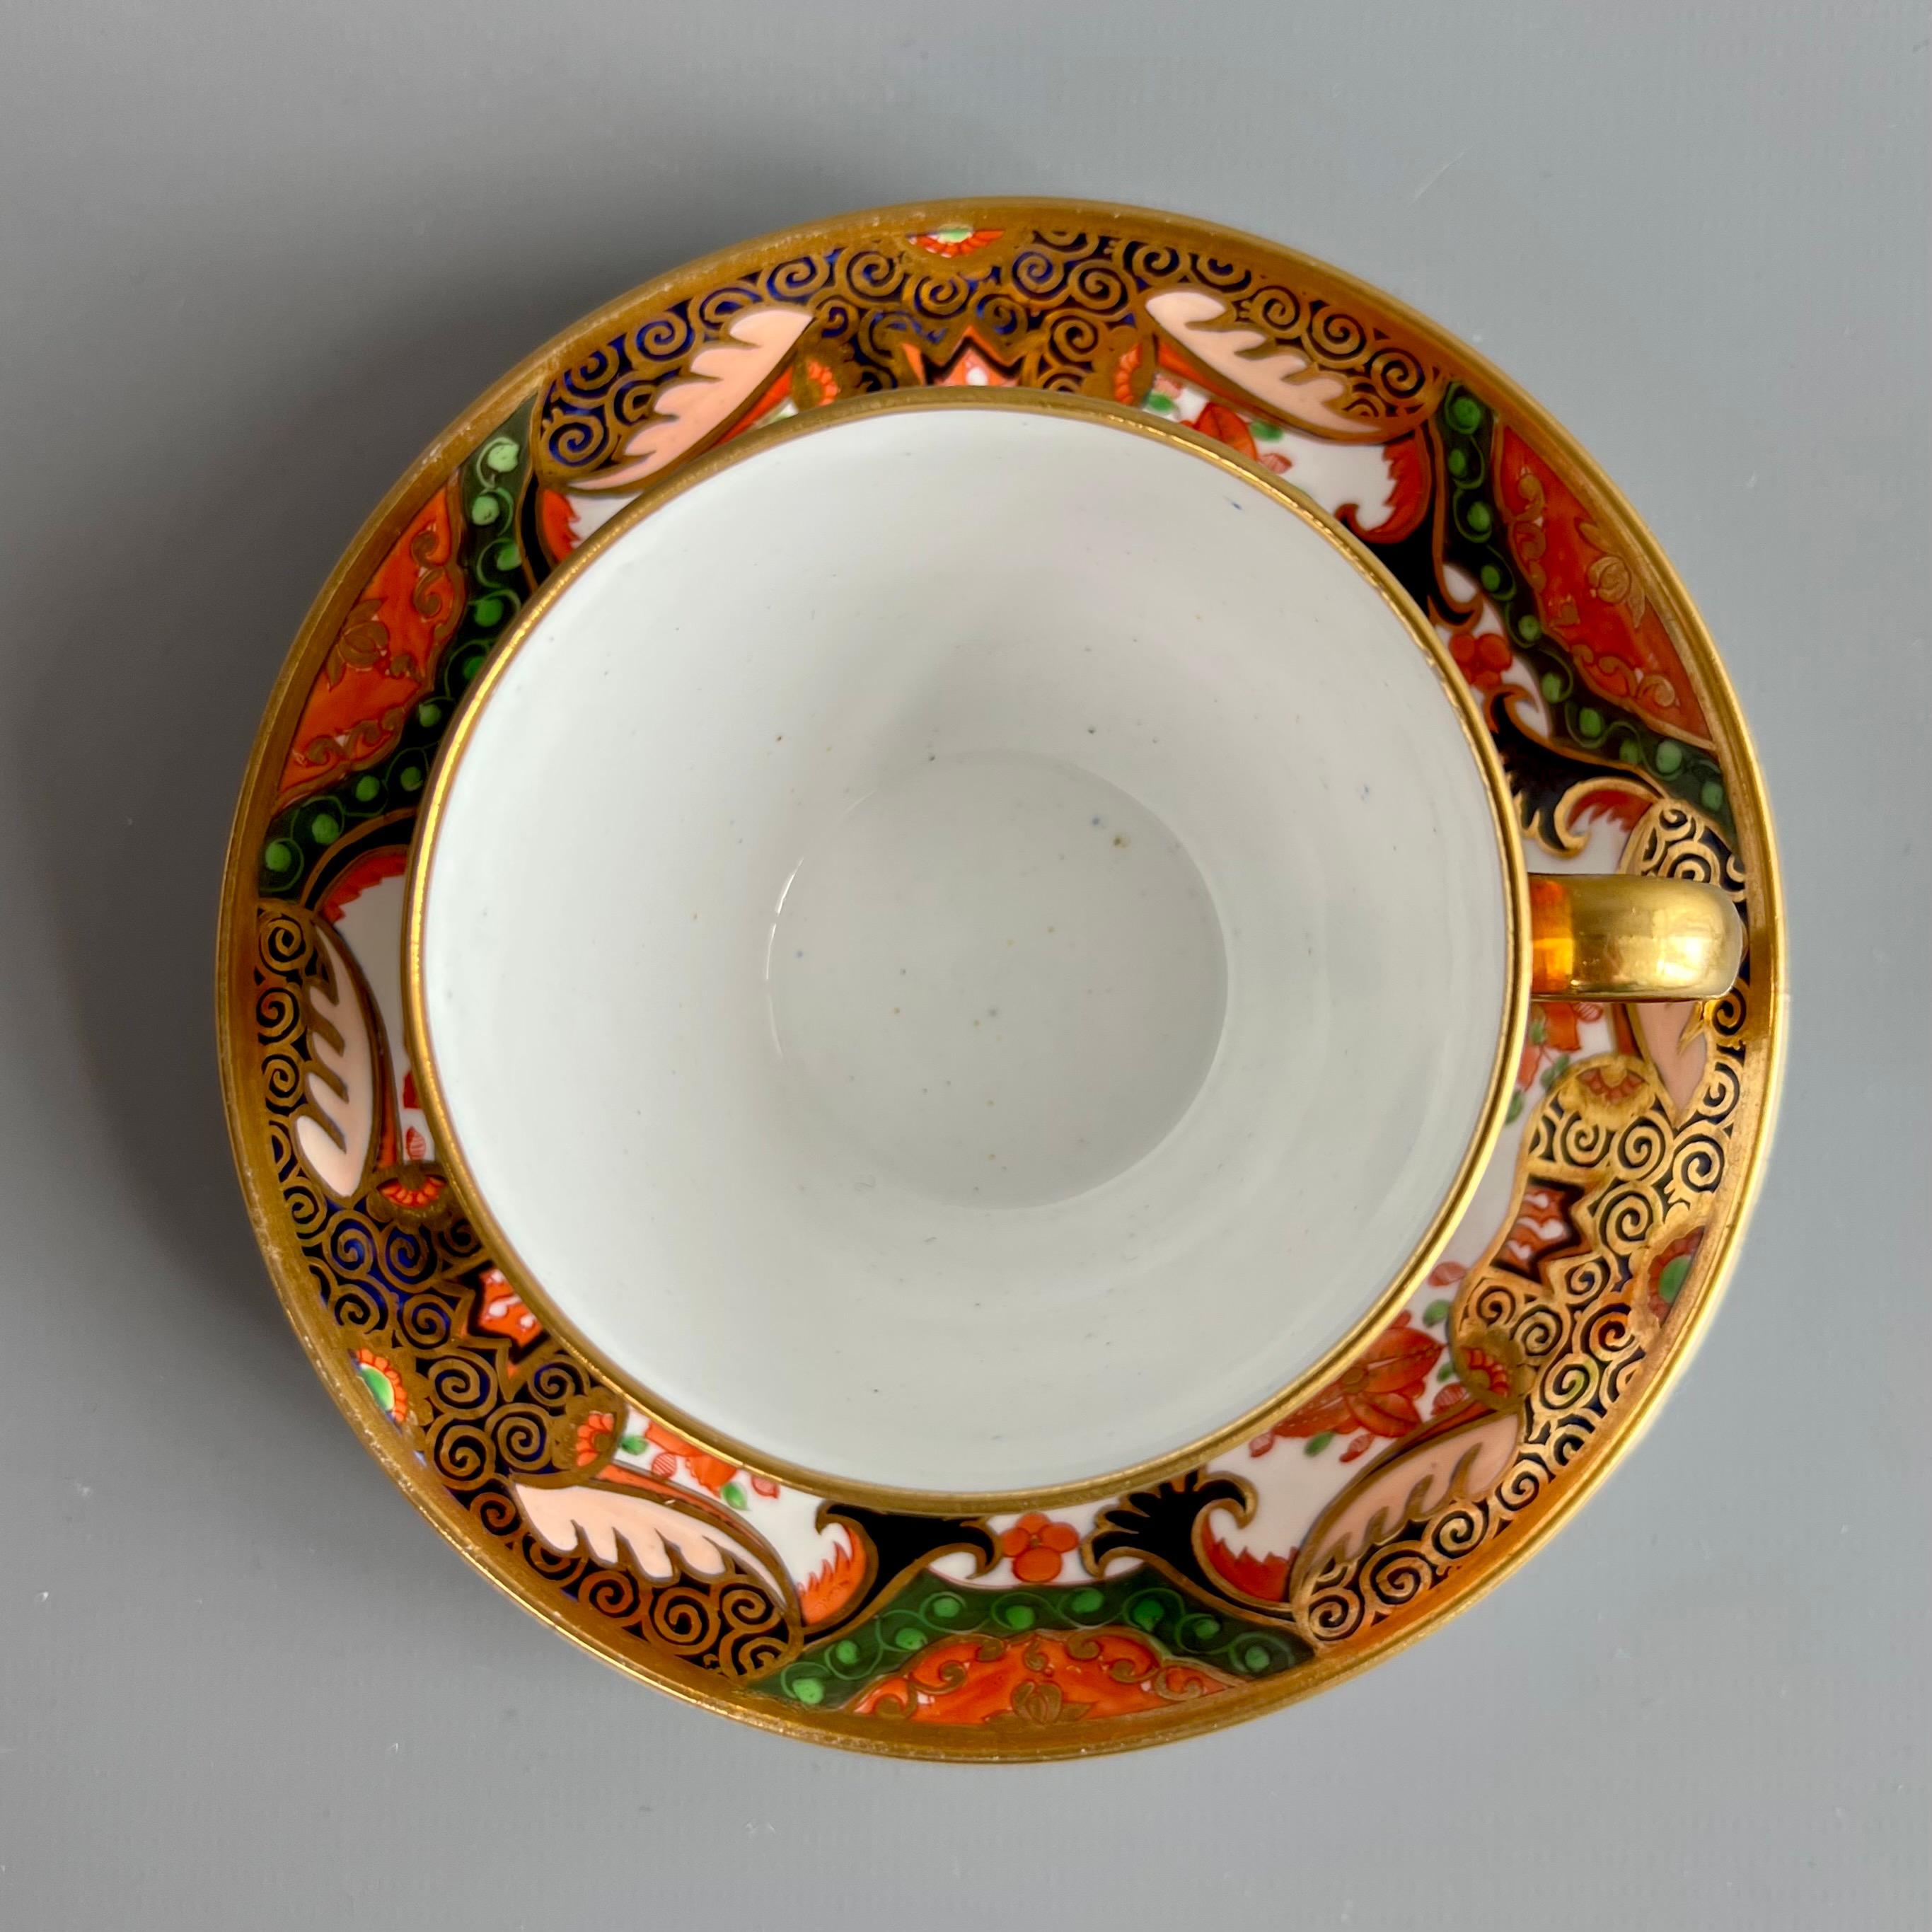 English Spode Porcelain Teacup Trio, Imari Tobacco Leaf Patt. 967, Regency, circa 1810